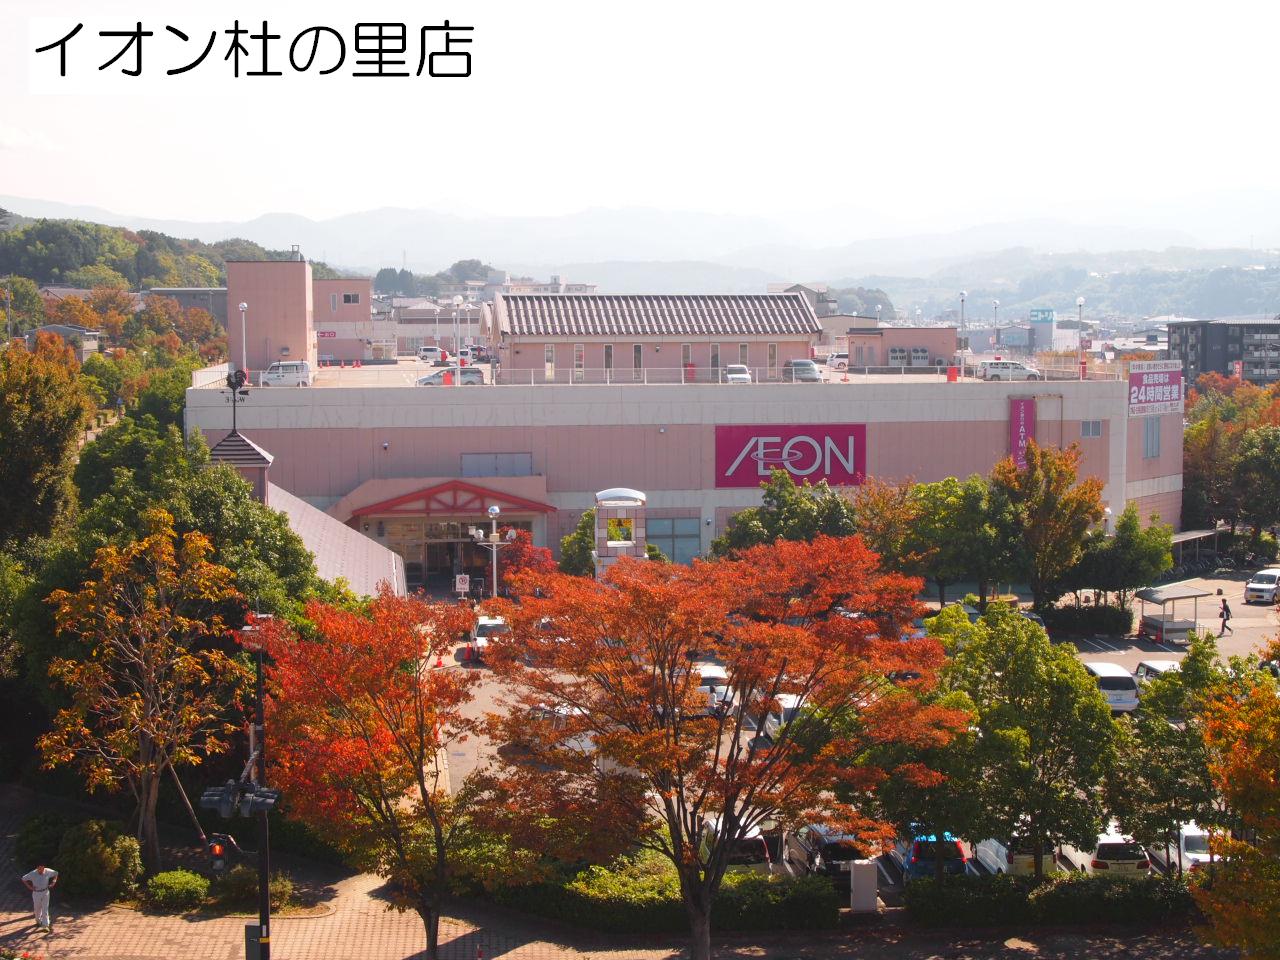 Shopping centre. 530m until ion Du-ri shopping center (shopping center)